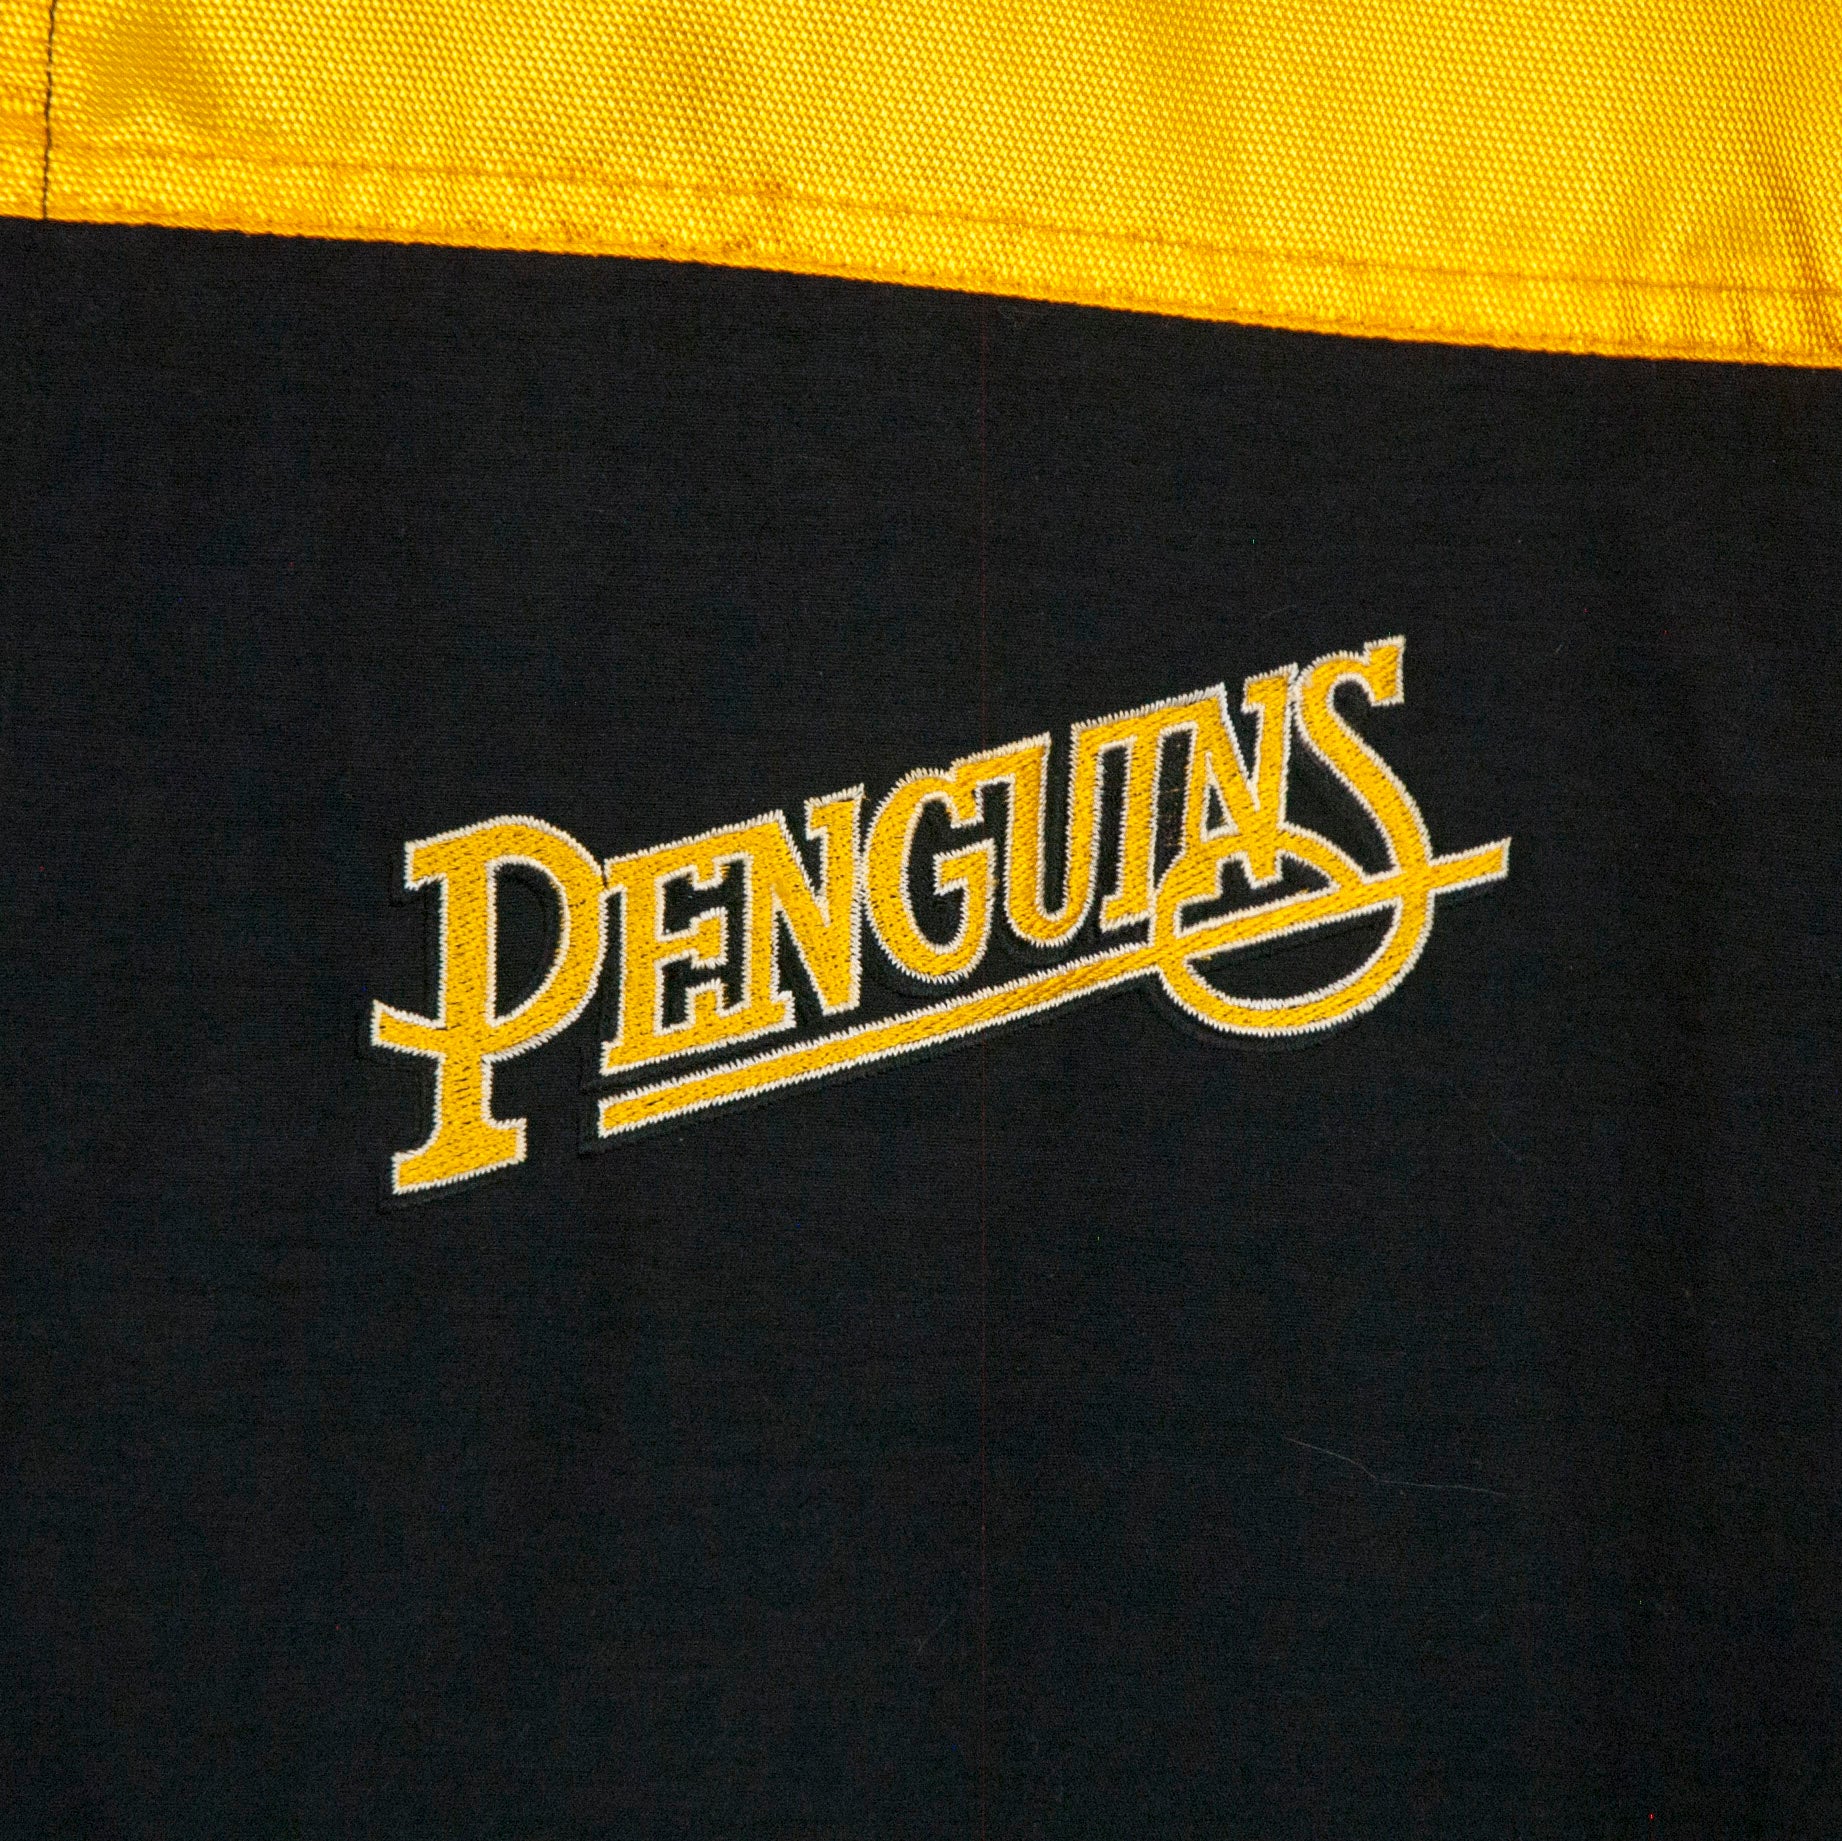 PITTSBURGH PENGUINS Starter Jacket Nylon YELLOW & BLACK Sewn